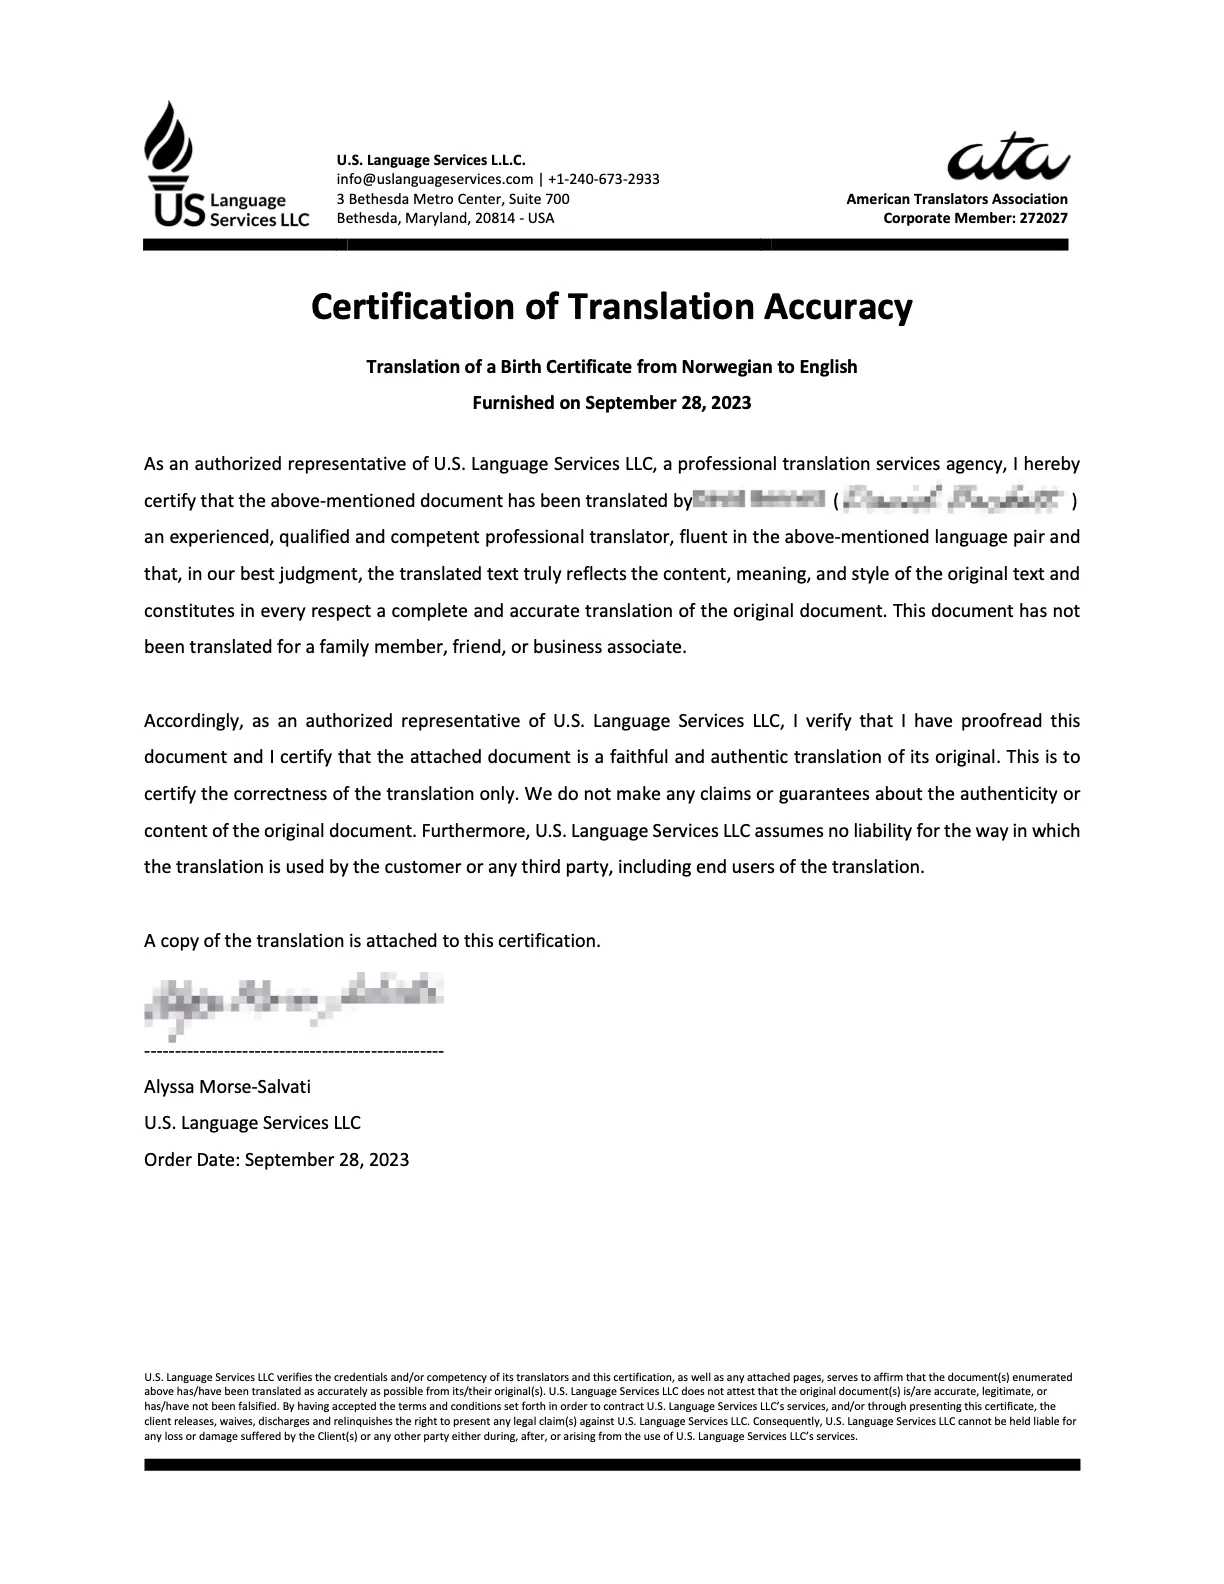 Certified Norwegian to English translation - Certificate Sample